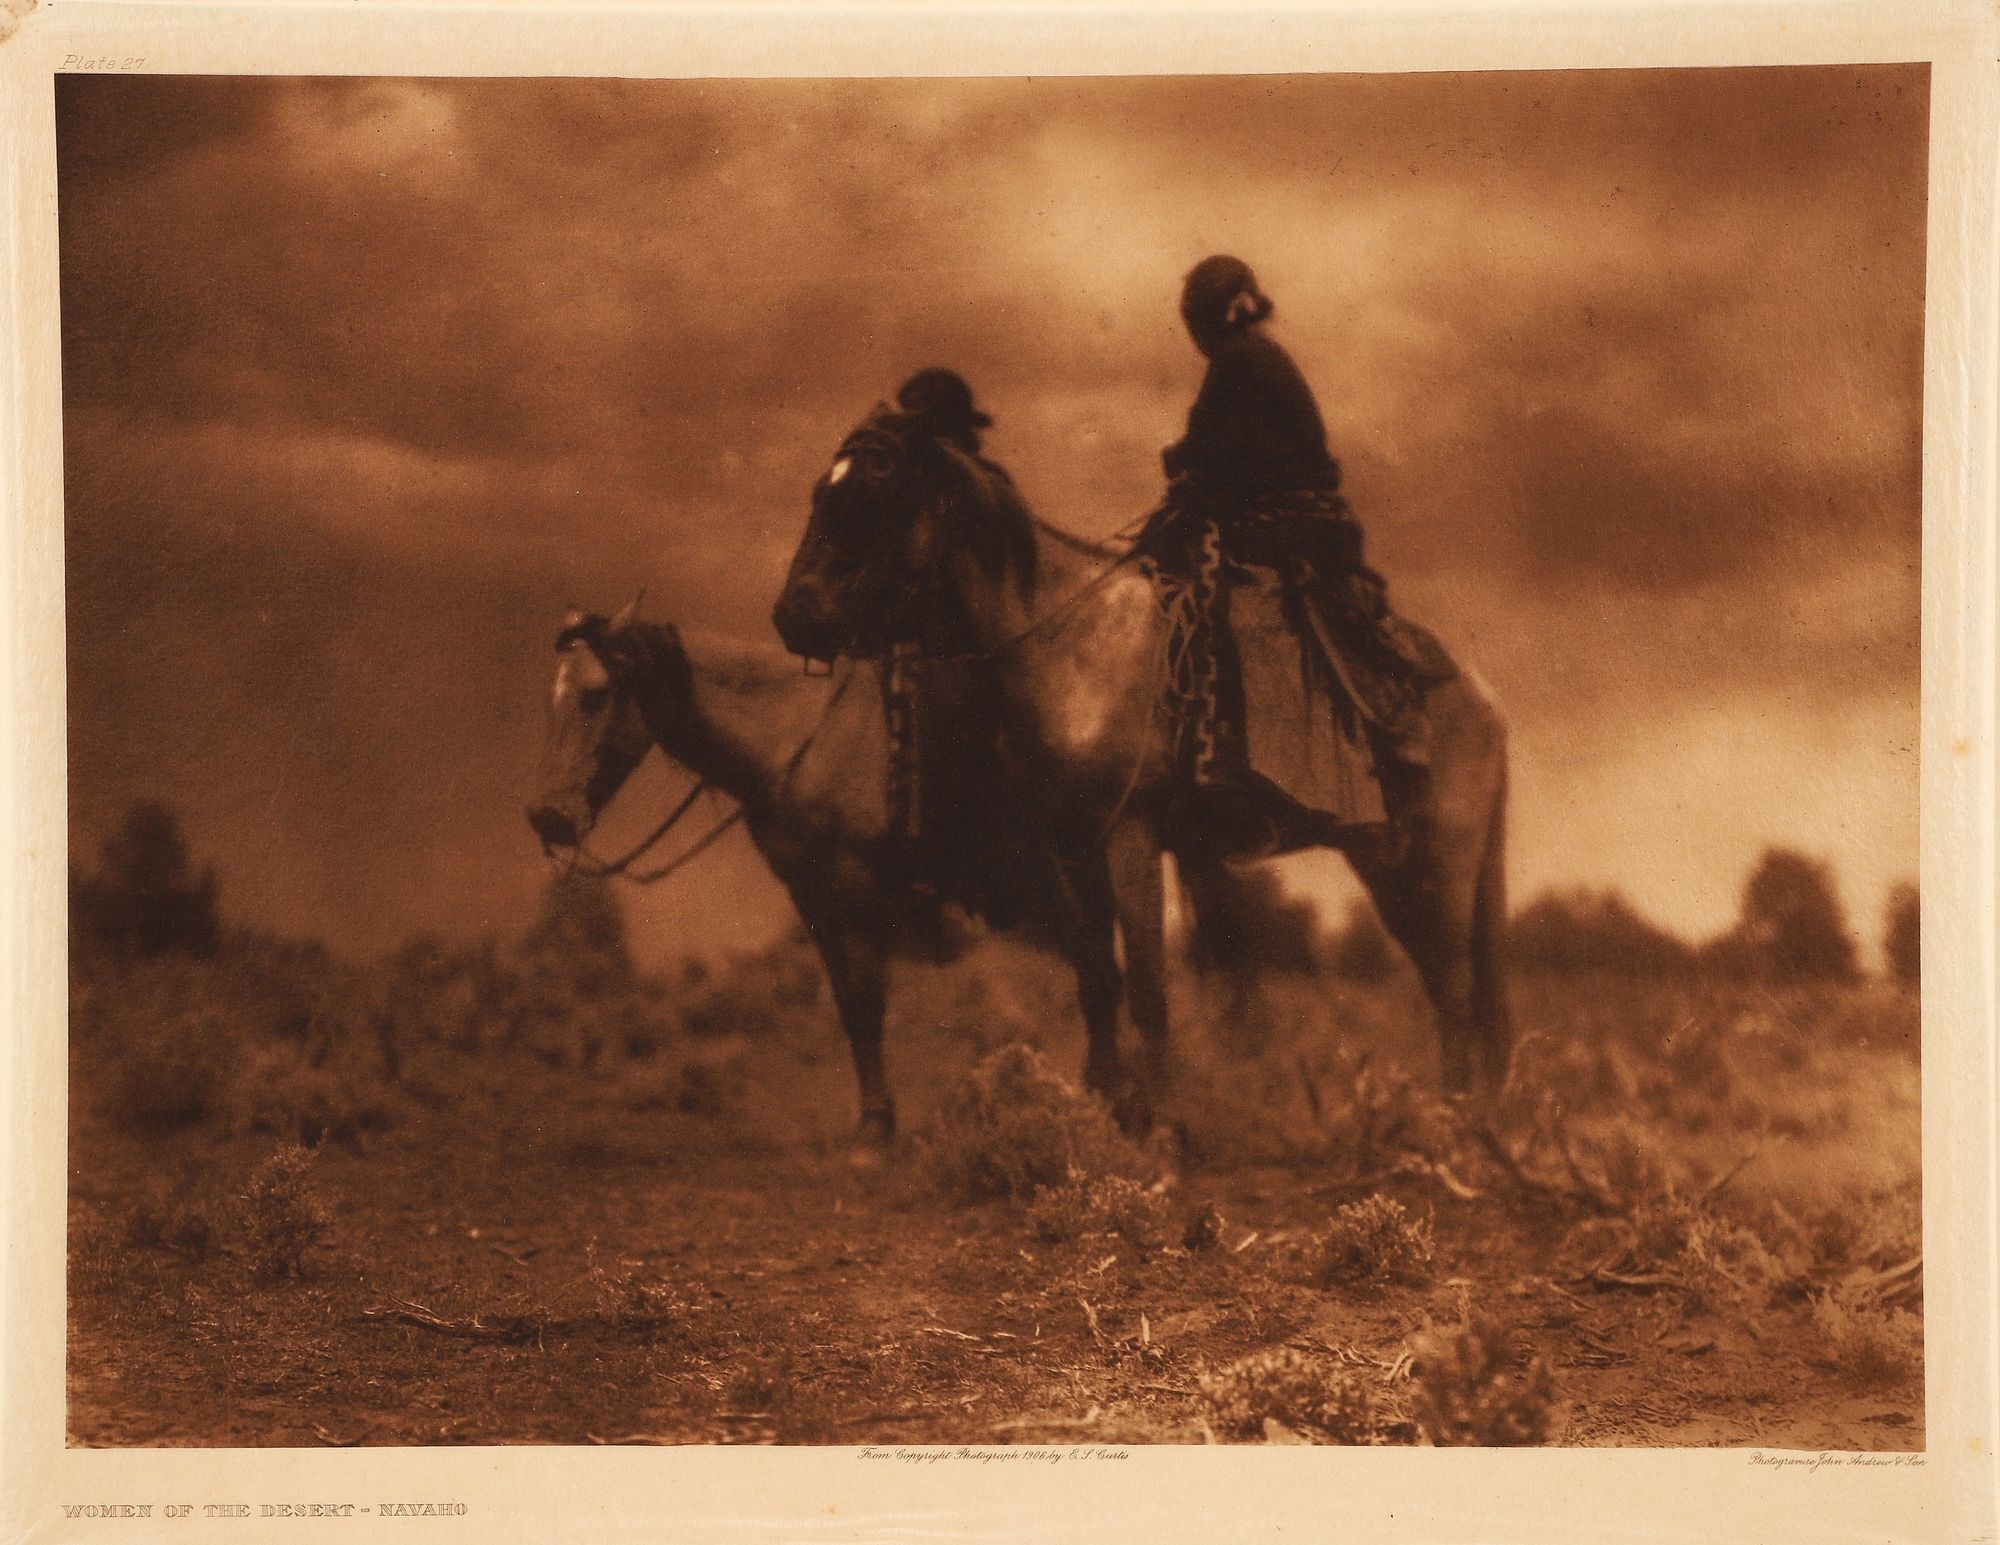 Edward Curtis large photogravure Women of the Desert Navaho - Edward S. Curtis